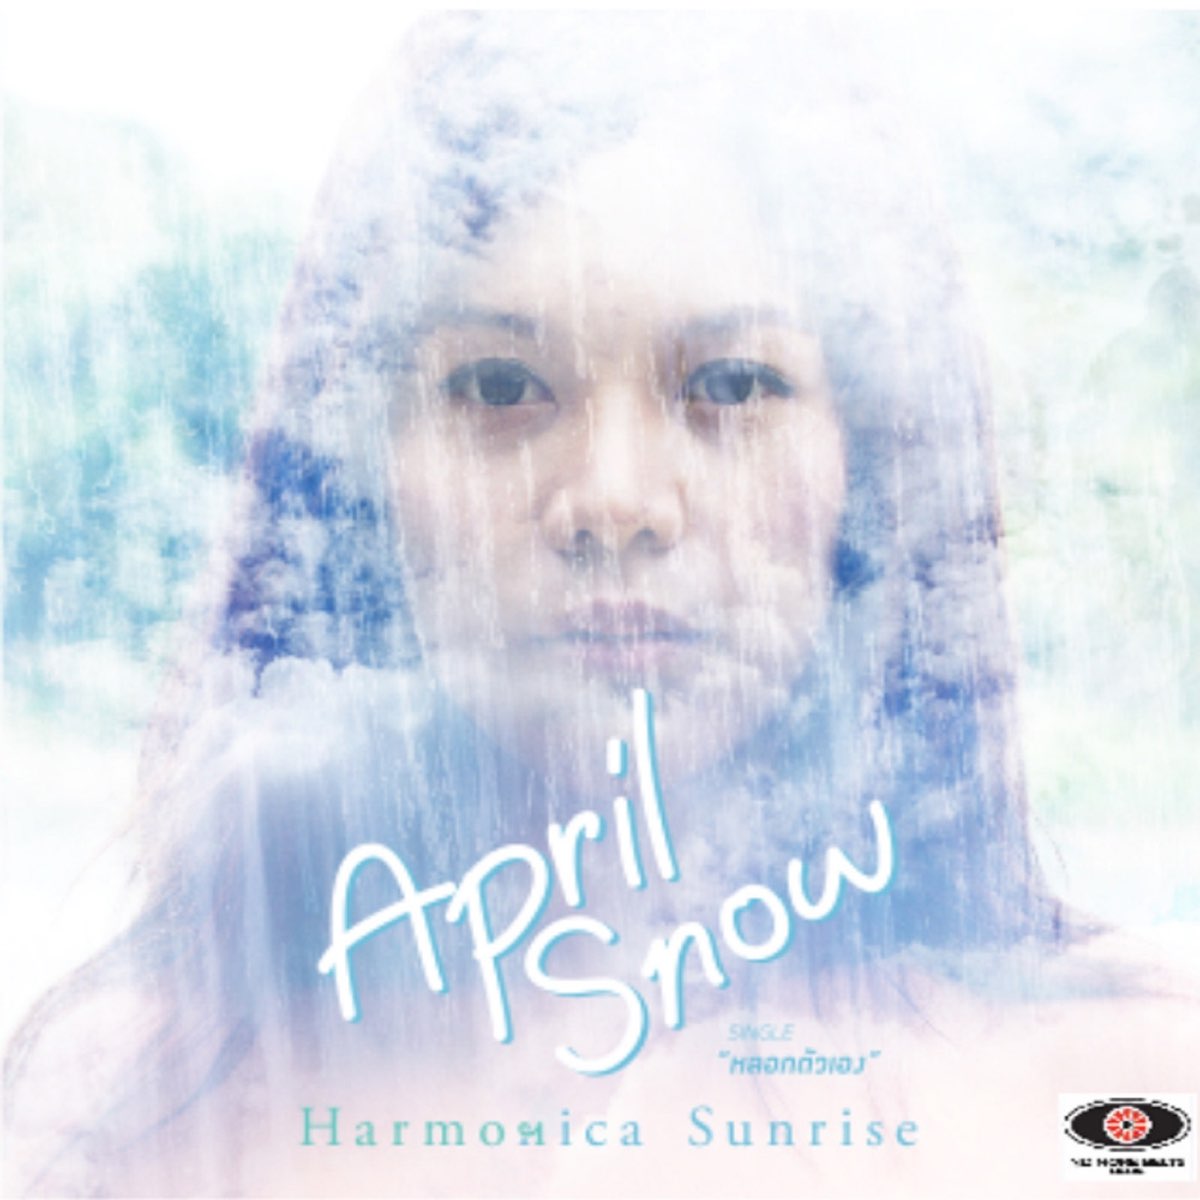 ‎April Snow (หลอกตัวเอง) Single by Harmonica Sunrise on Apple Music